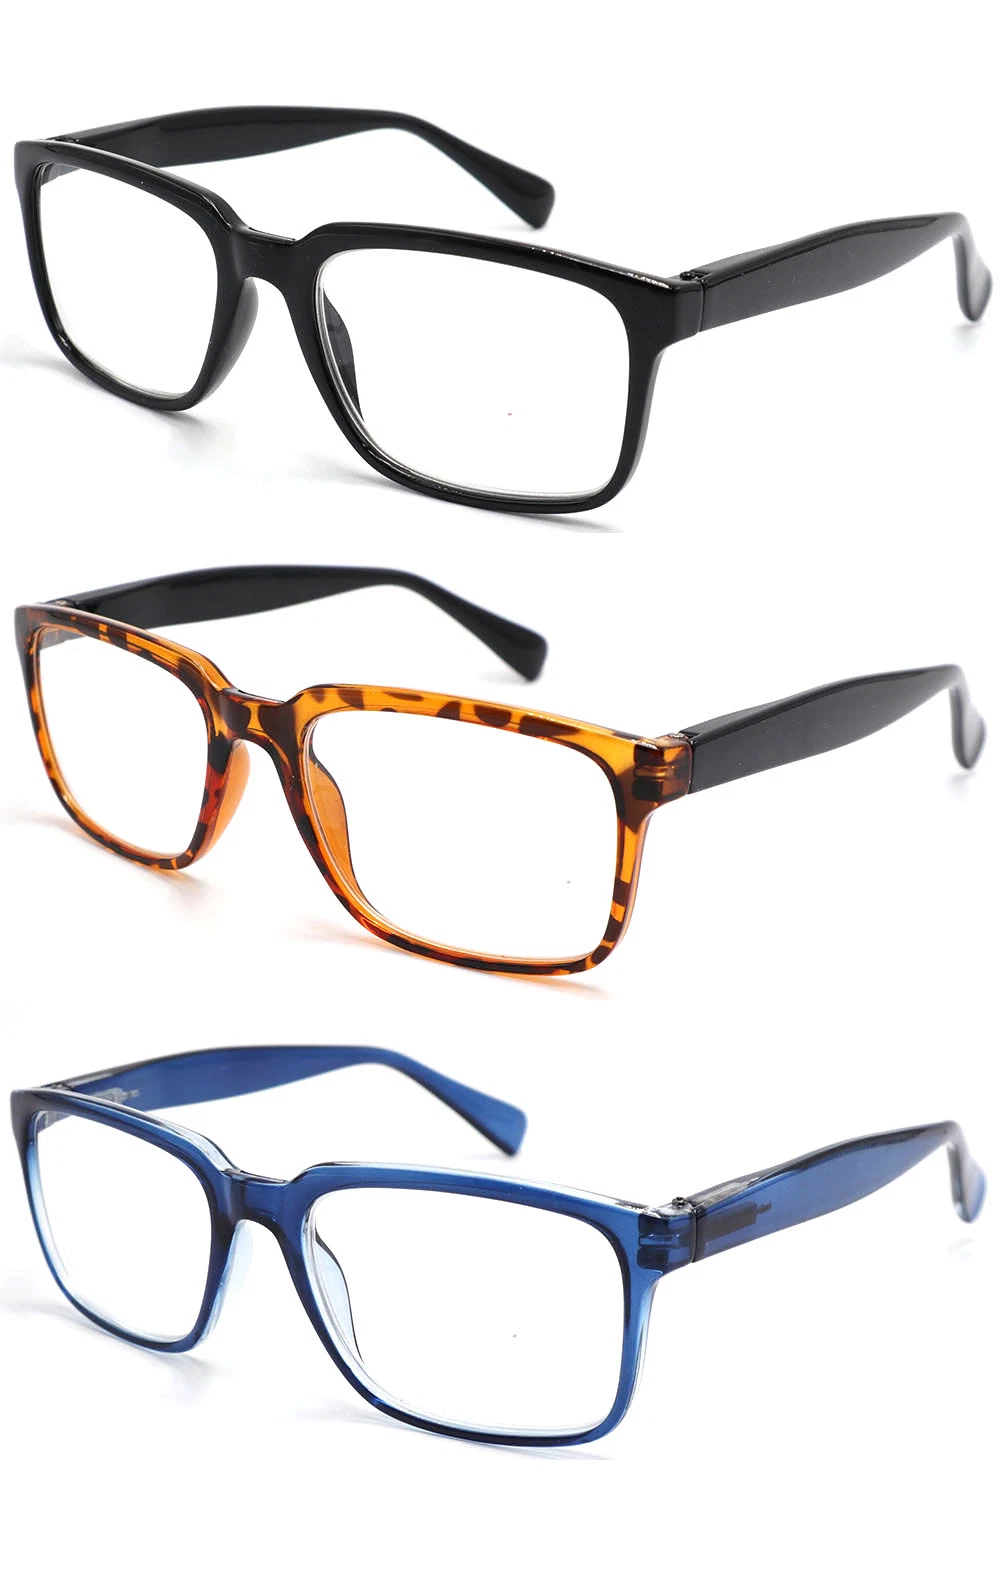 Black Fashion Luxury Customized Black Square Spring Hinge Plastic CE Reading Glasses for Men